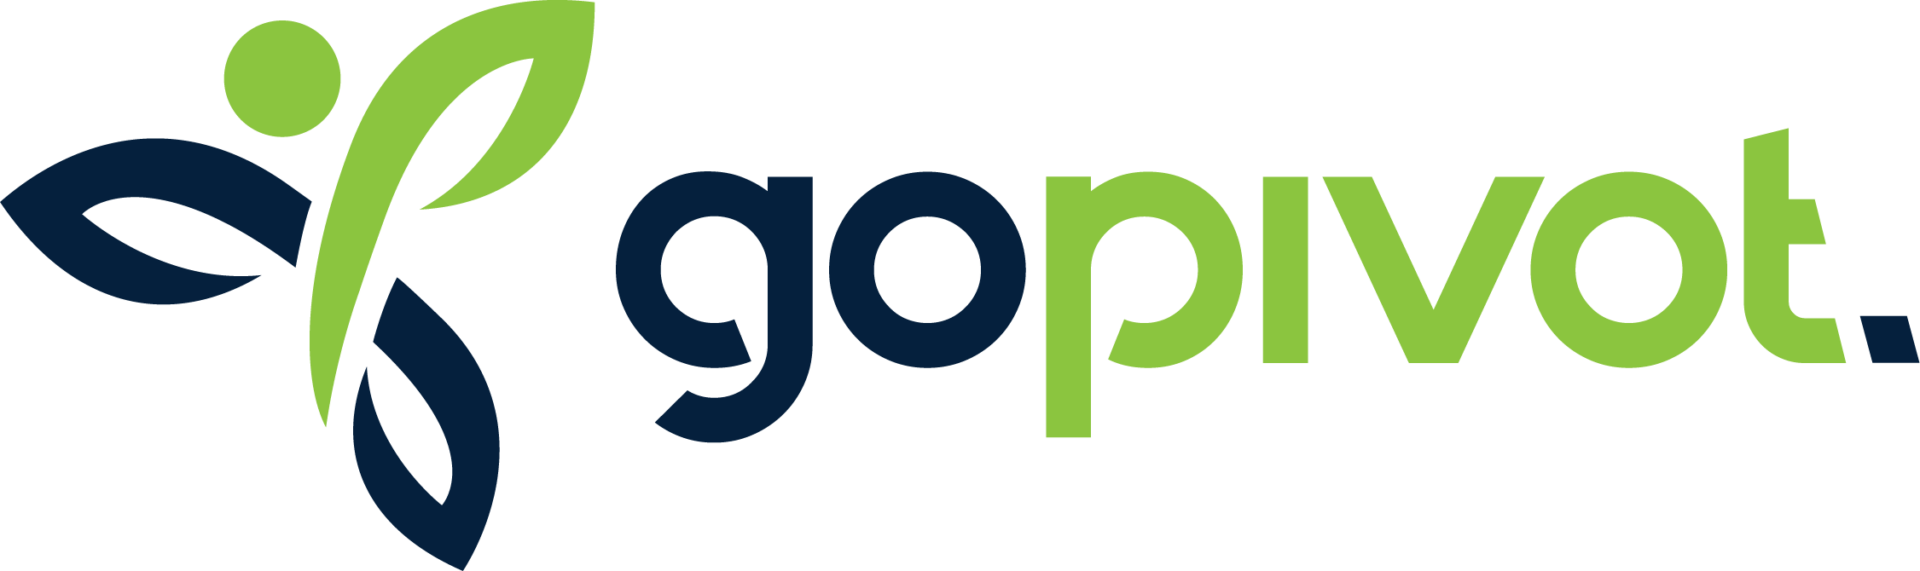 GoPivot Launches Pay-for-Performance Platform that Incentivizes Employee Behavior Change